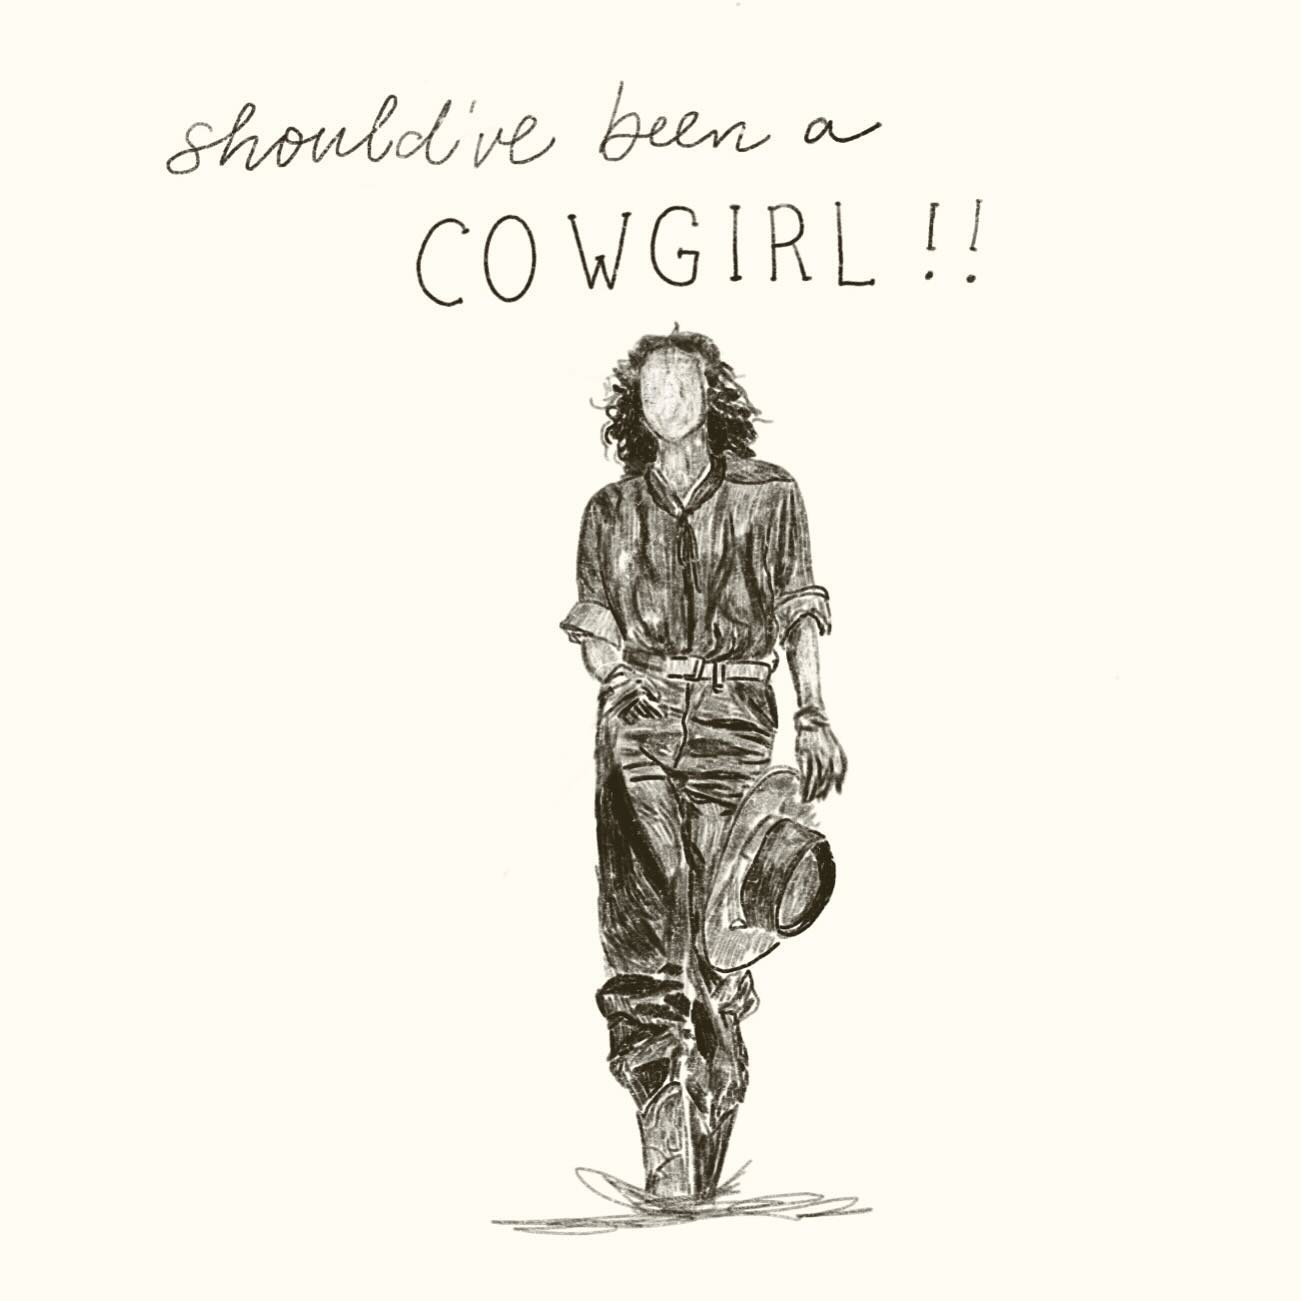 Long live cowgirls !!!! 💌🤠🤟🏻

#westernart #westernartist #cowgirlart #tobykeith #shouldvebeenacowboy #cowgirlstyle #westerncreator